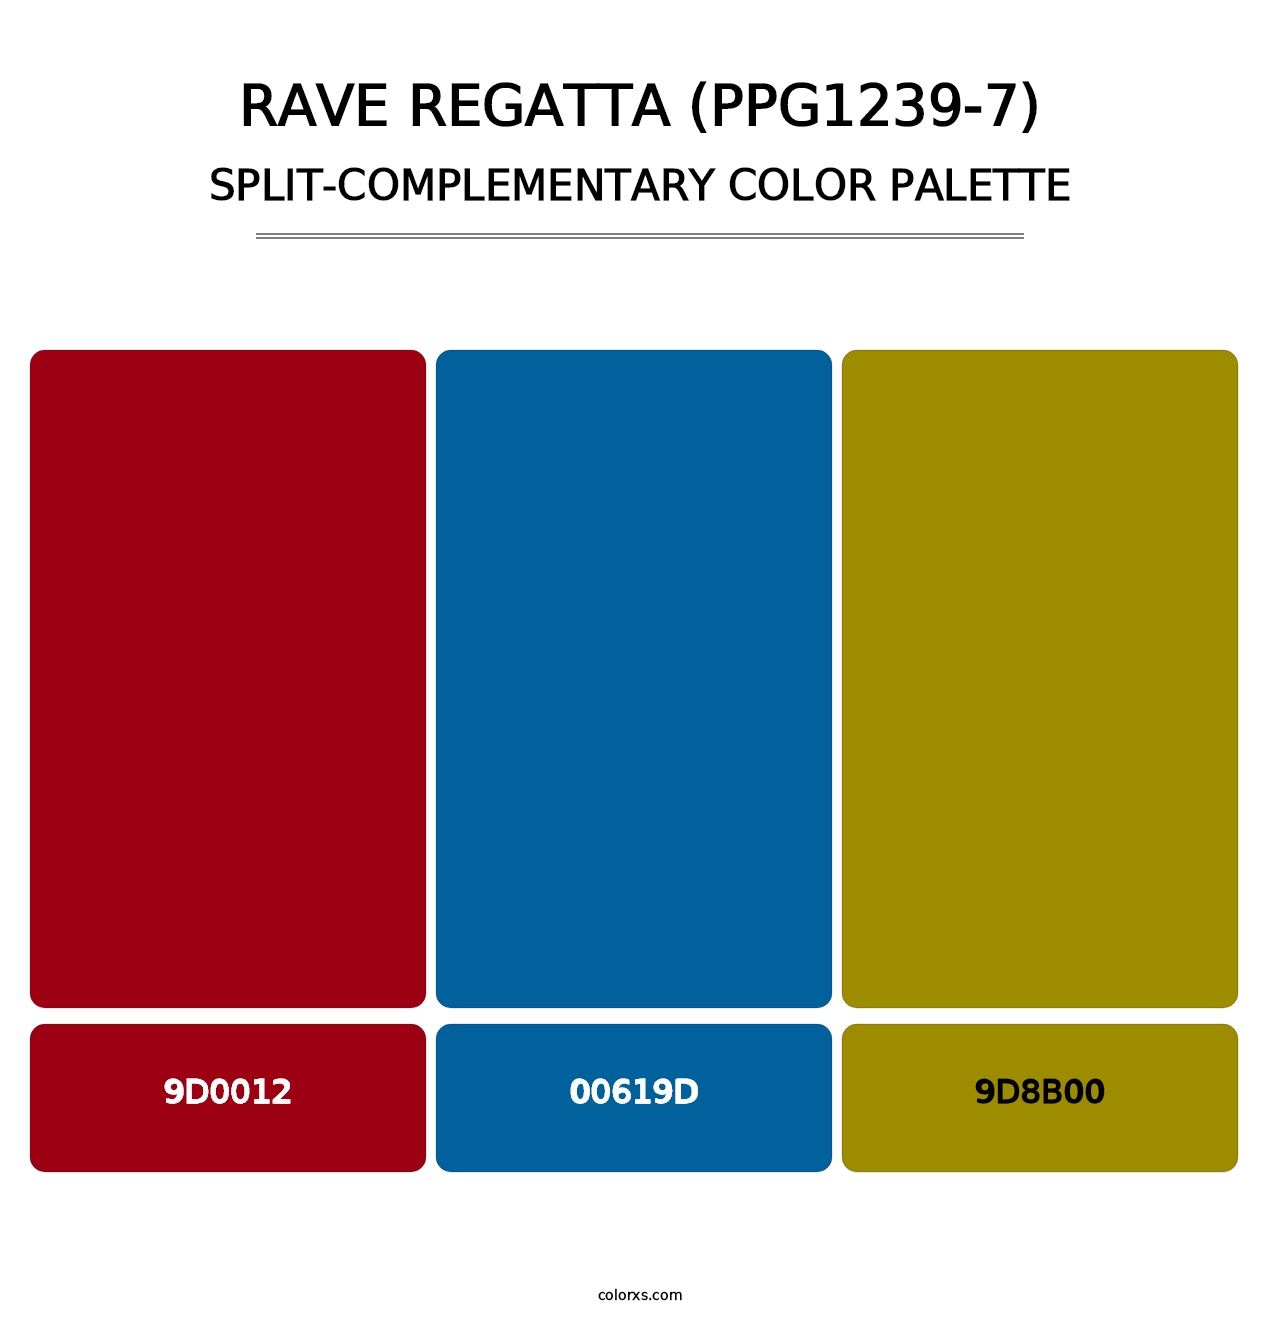 Rave Regatta (PPG1239-7) - Split-Complementary Color Palette